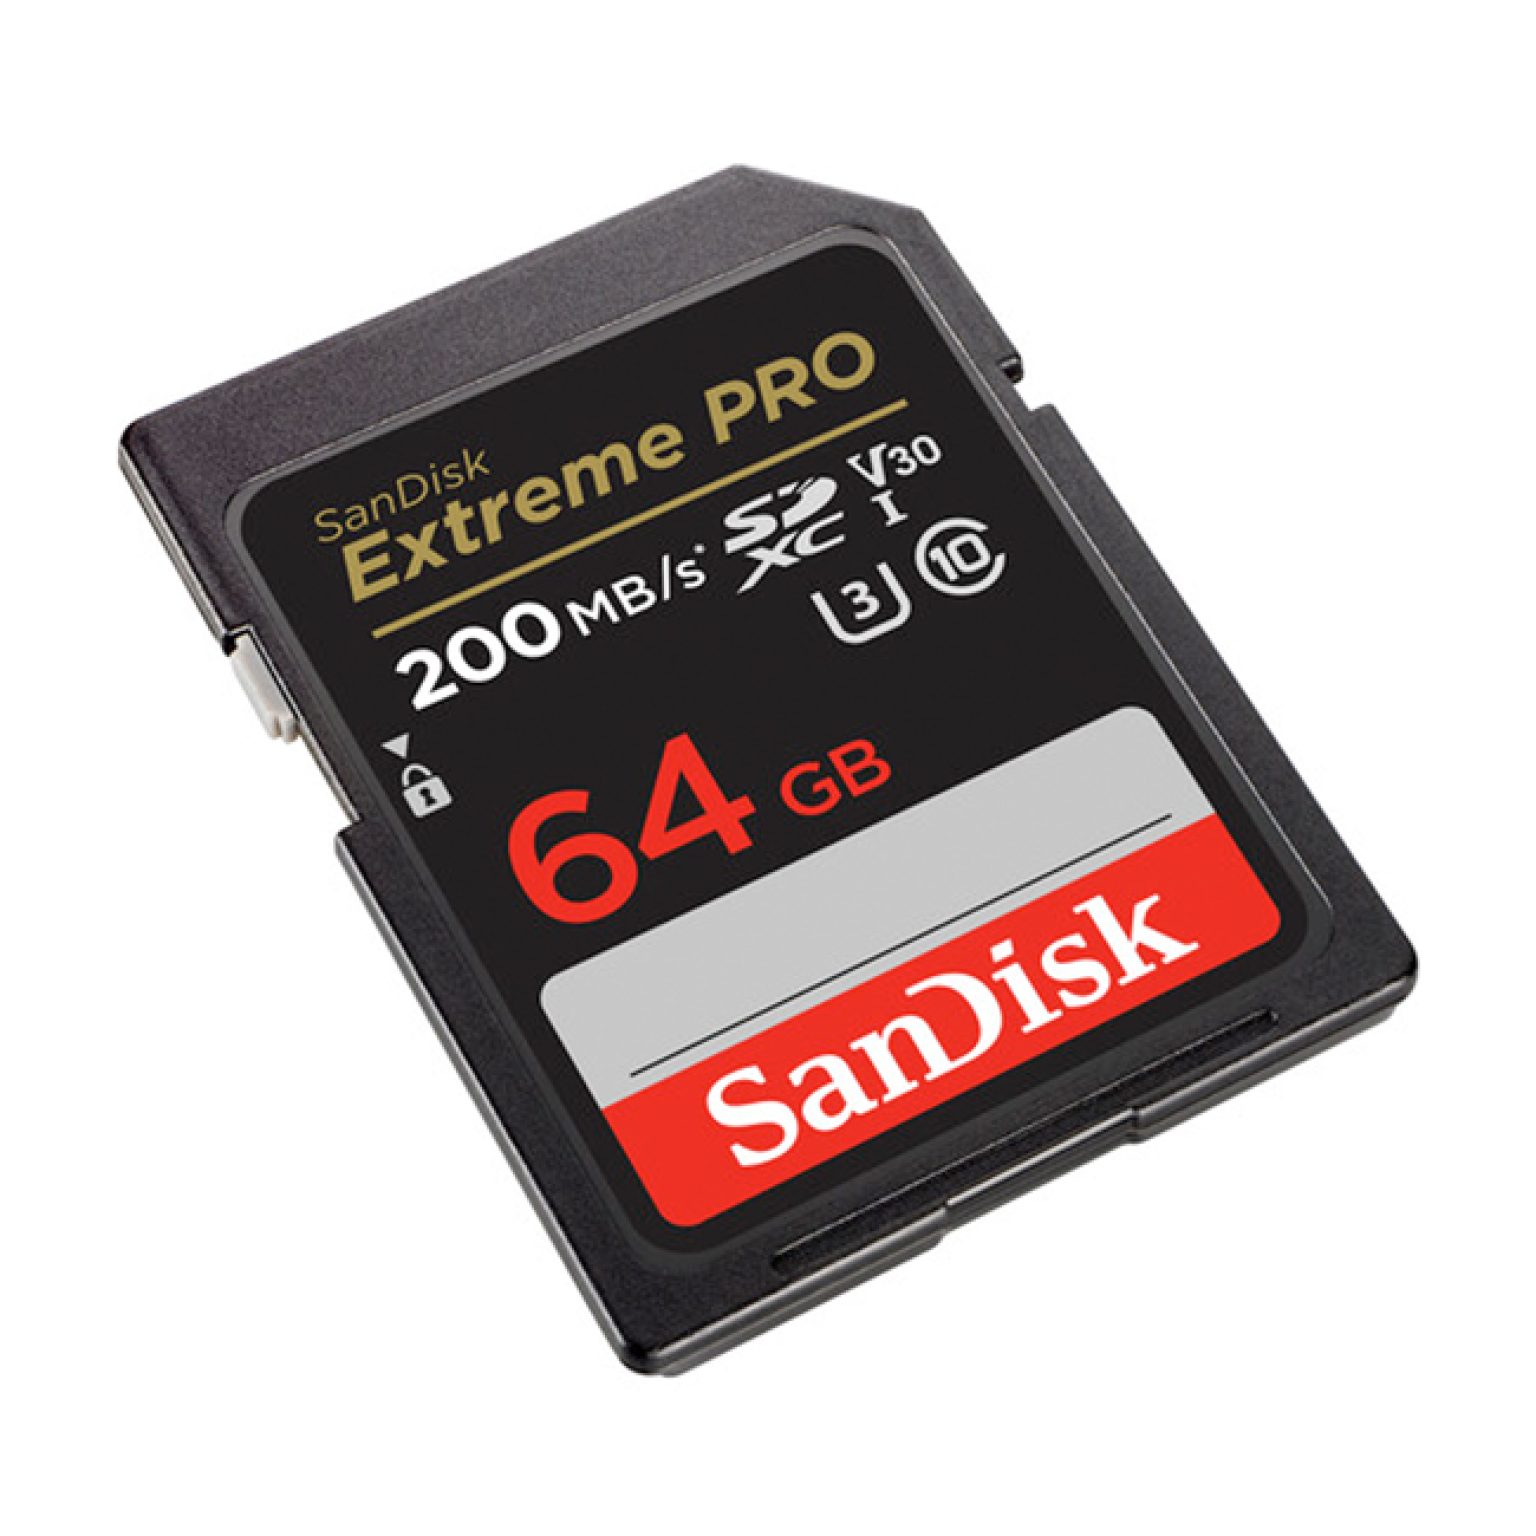 کارت حافظه سندیسک SanDisk SD 64GB Extreme PRO 200MB/s